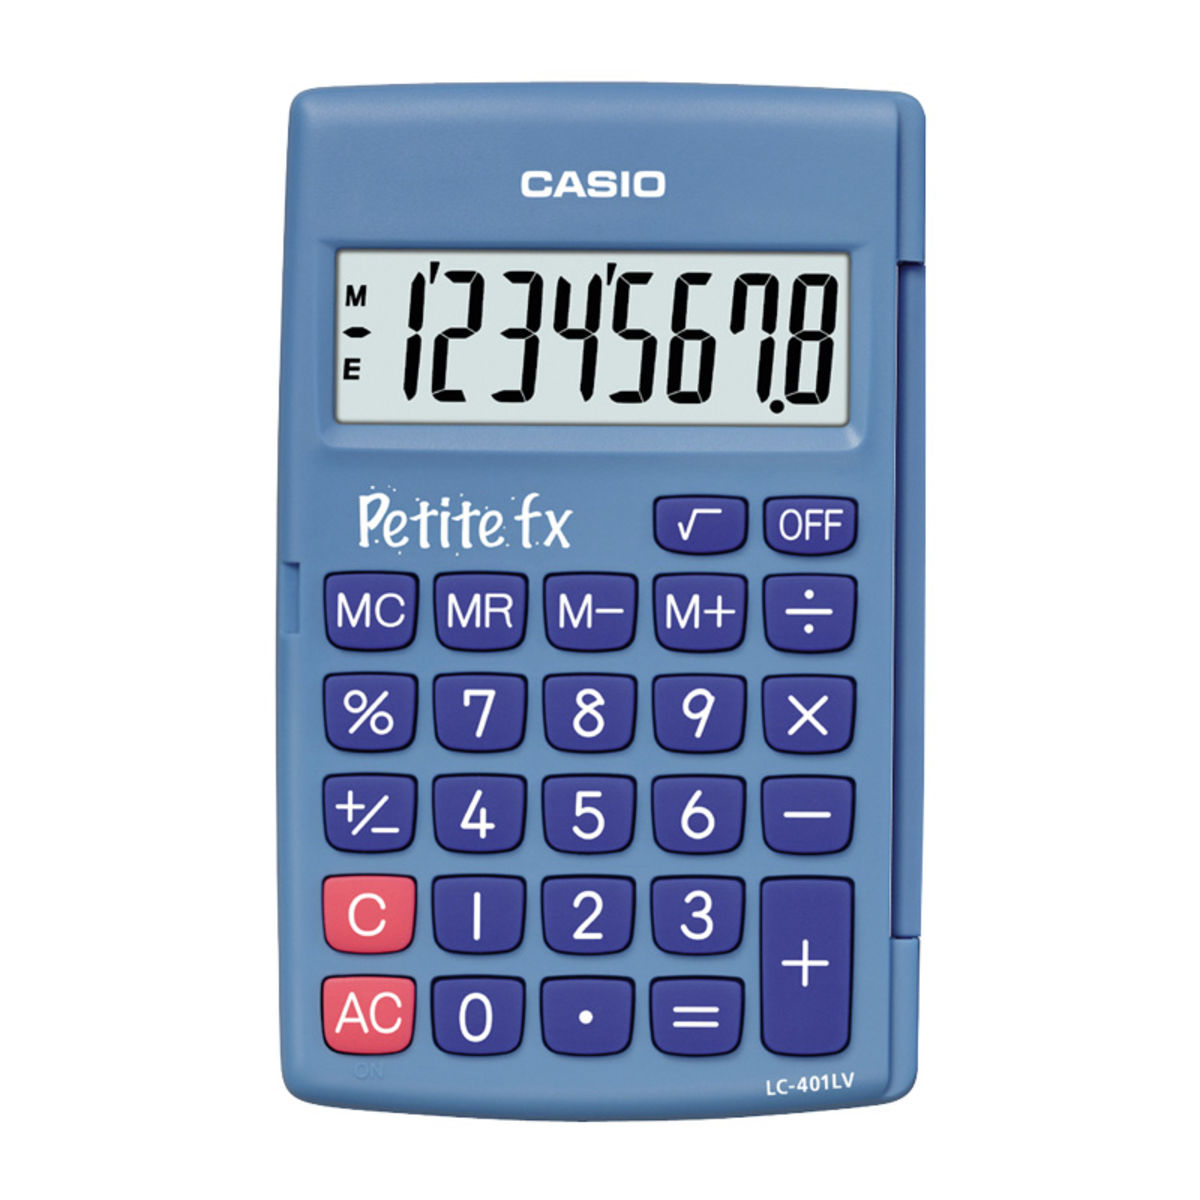 Casio Ecole primaire Calculatrice Petite fx LC-401LV Bleu